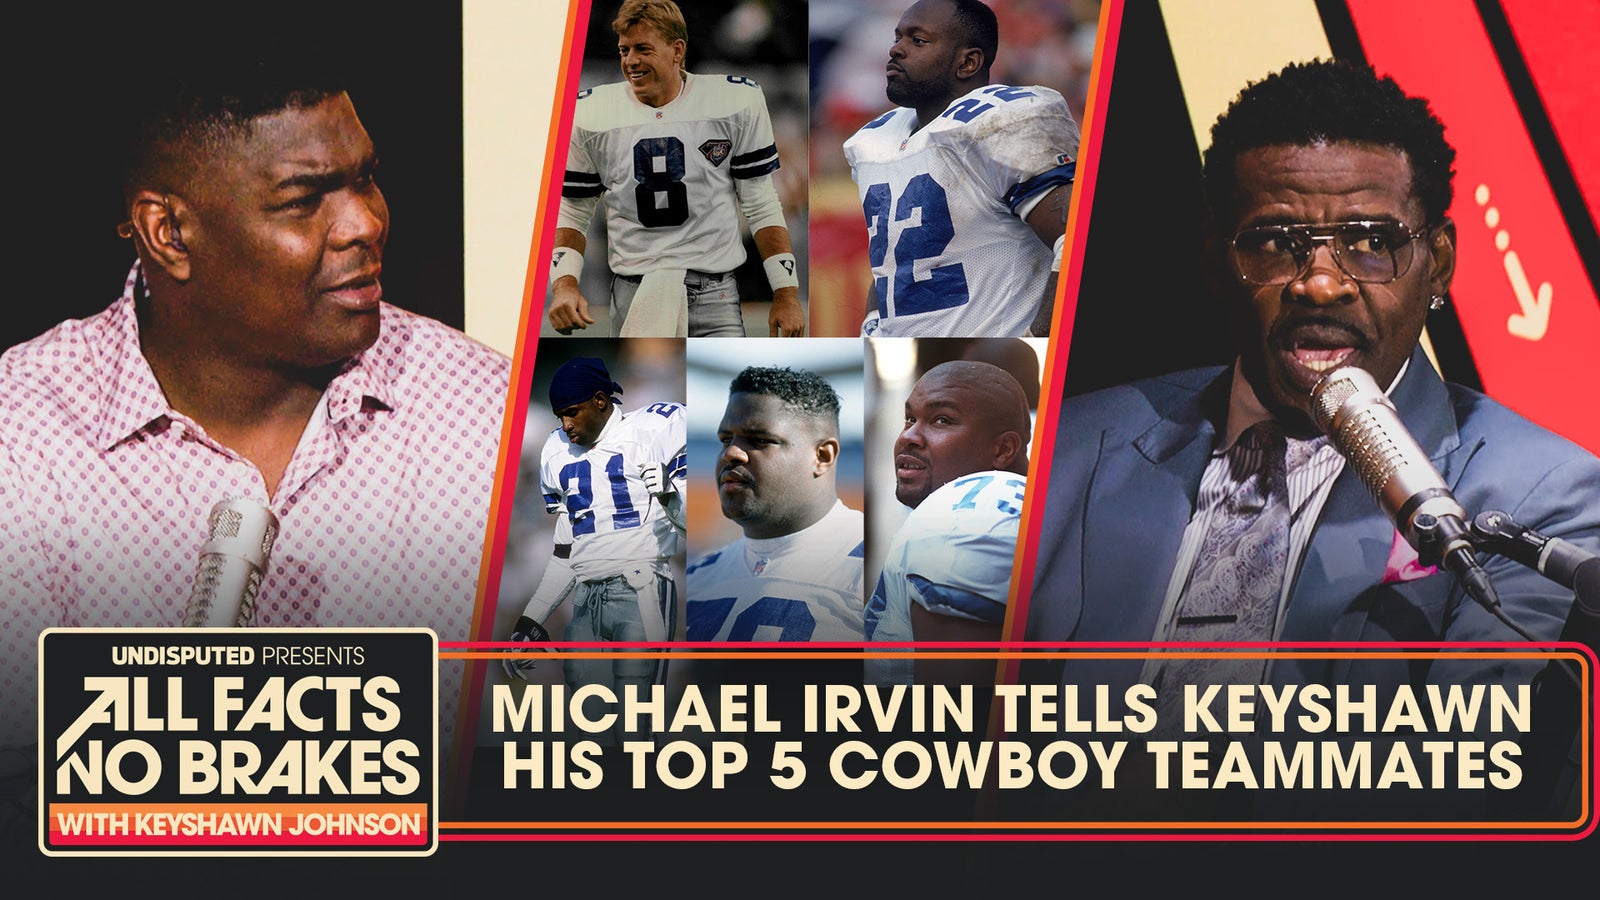 Michael Irvin names Larry Allen among his Top 5 Dallas Cowboys teammates